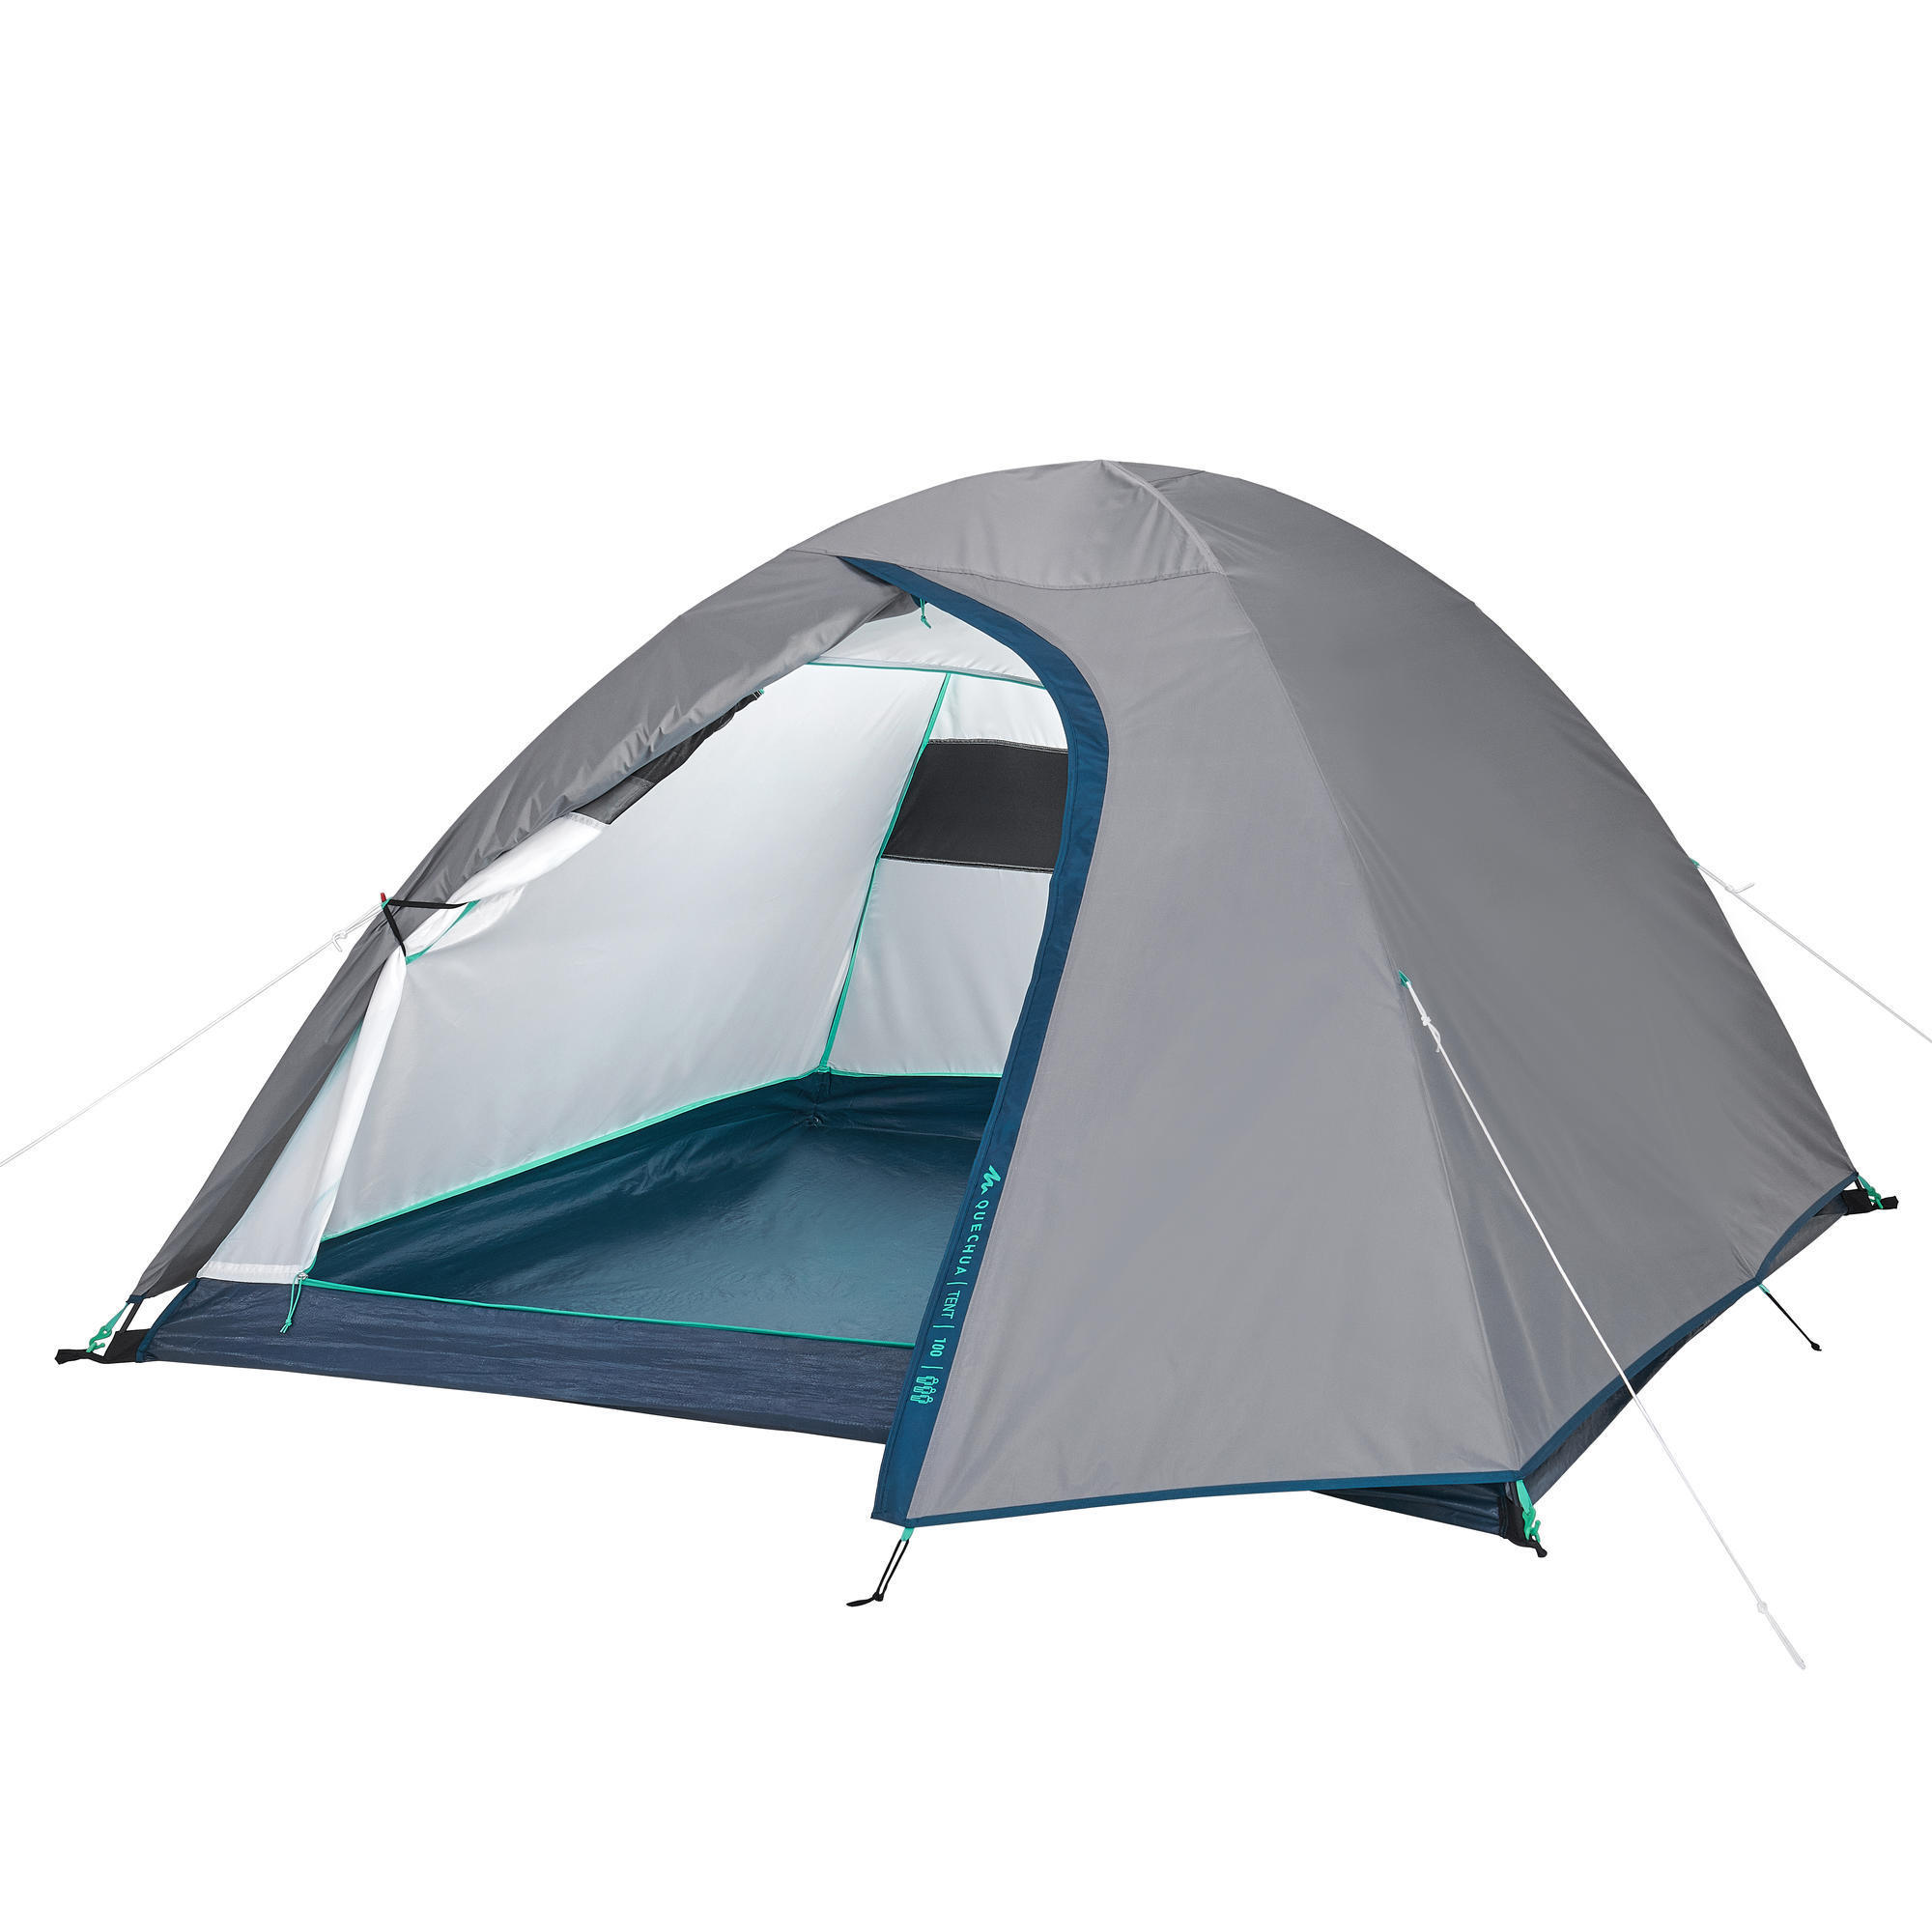 decathlon tents for rent